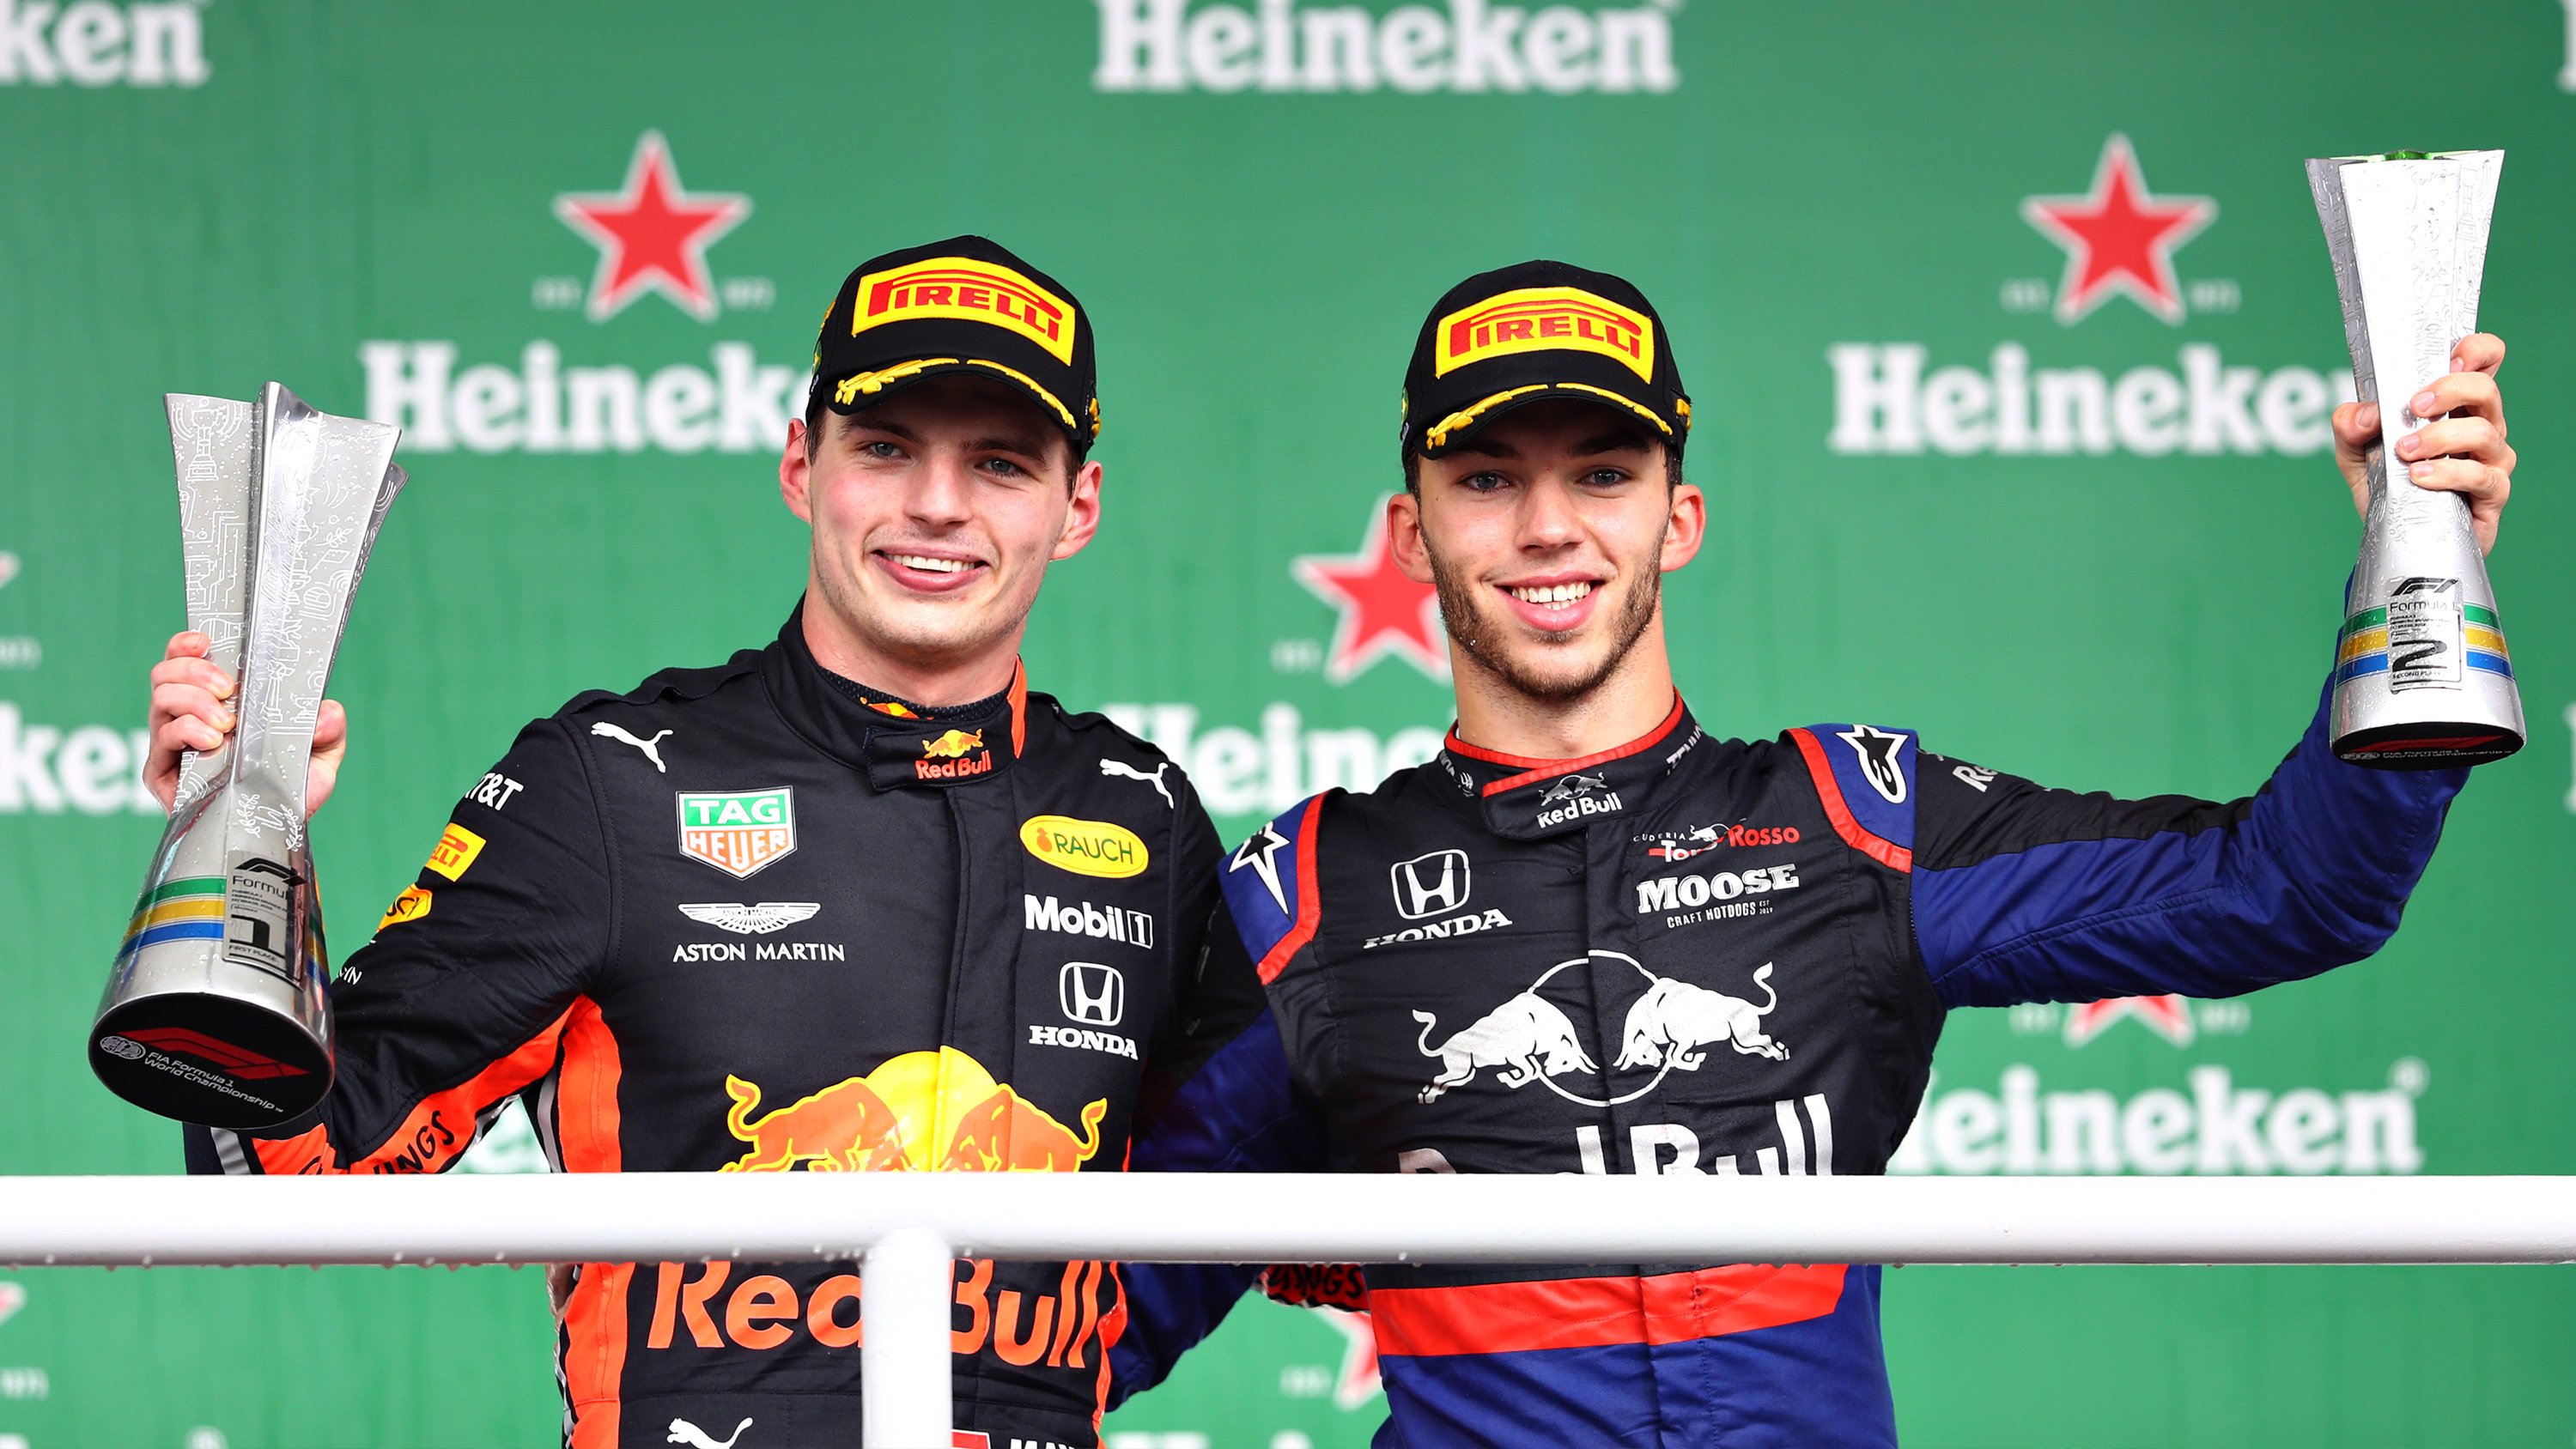 Une bonne journée pour les pilotes Red Bull / Toro Rosso© RedBull Racing Media